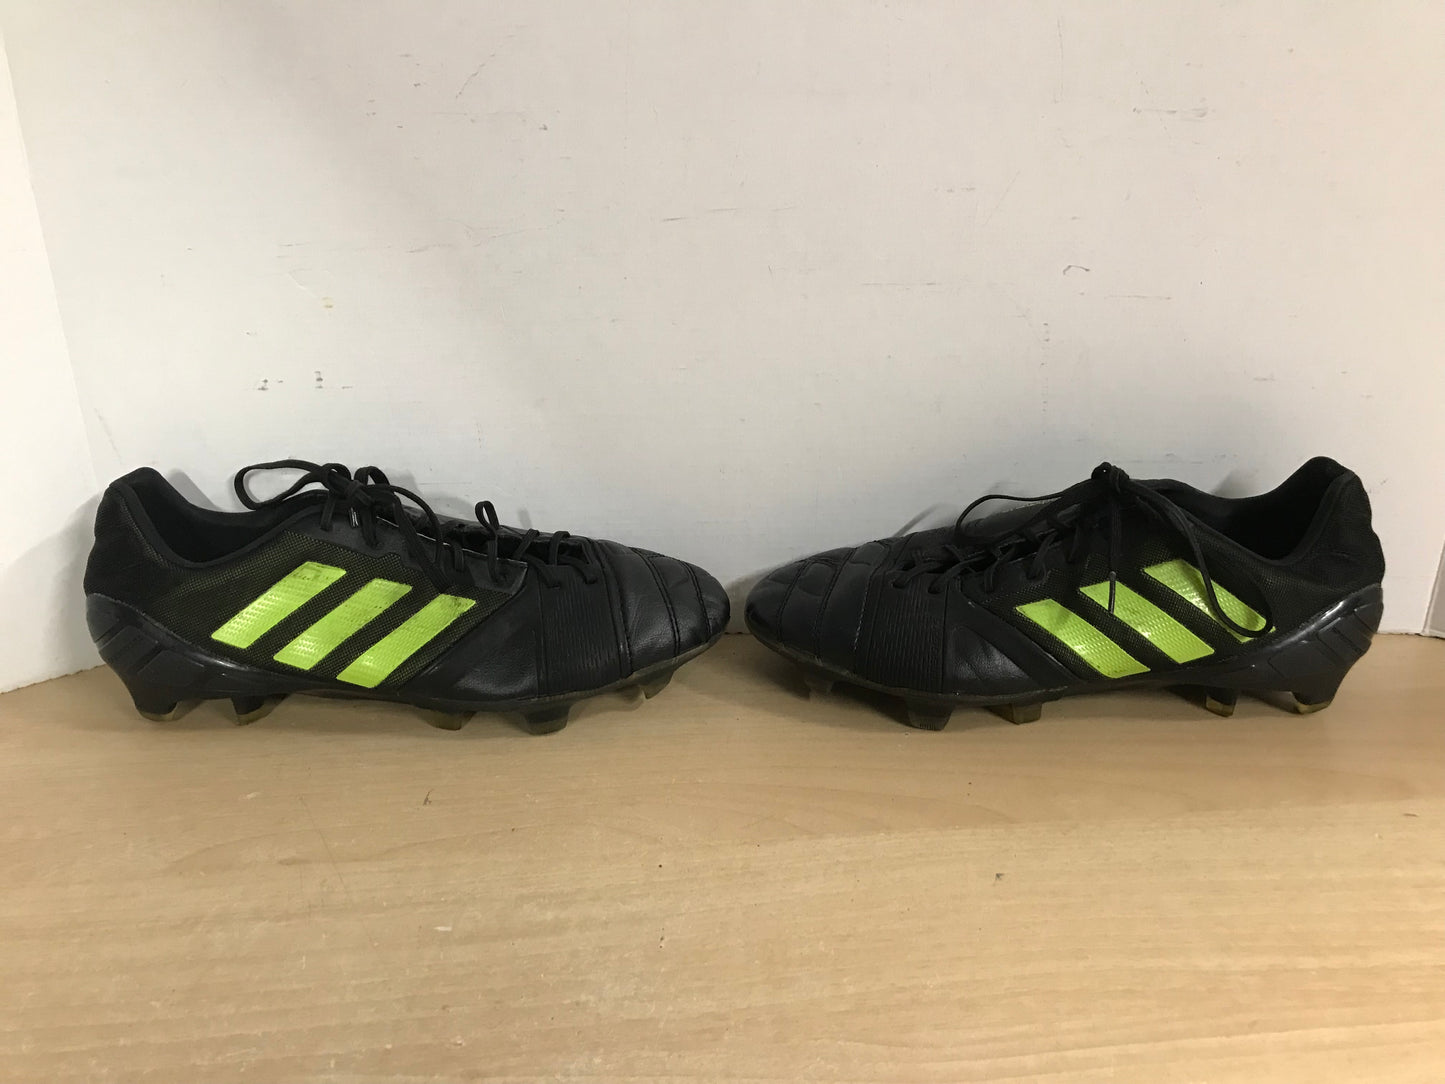 Soccer Shoes Cleats Men's Size 7.5 Adidas Nitrocharge Leather Black Lime Excellent